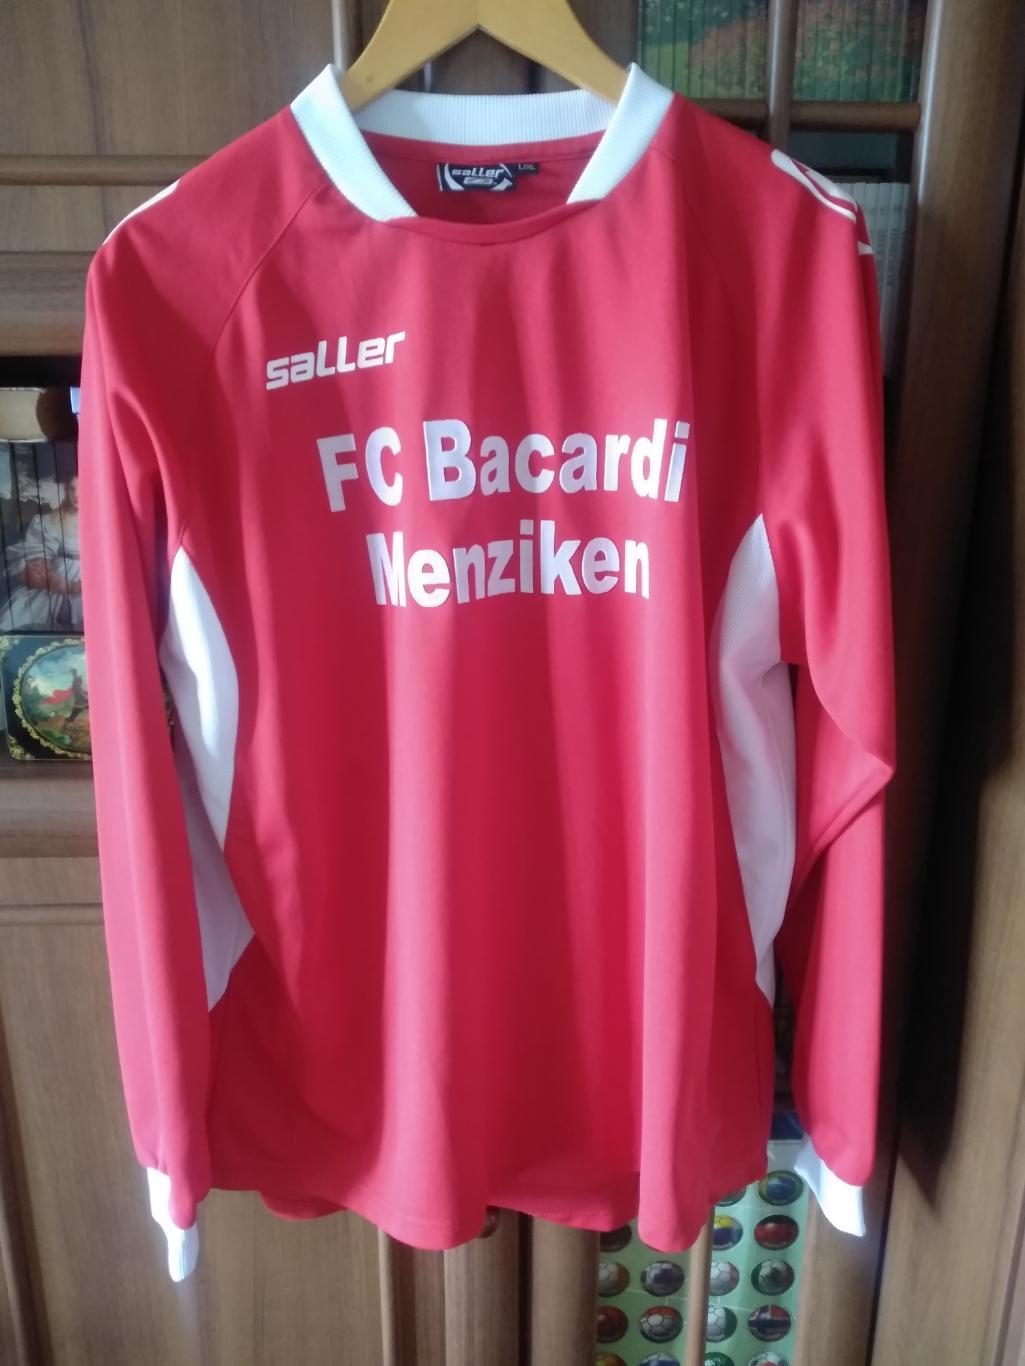 Футболка игровая FC Bacardi Menziken/ФК Бакарди Мензикен Швейцария. 1990-е года